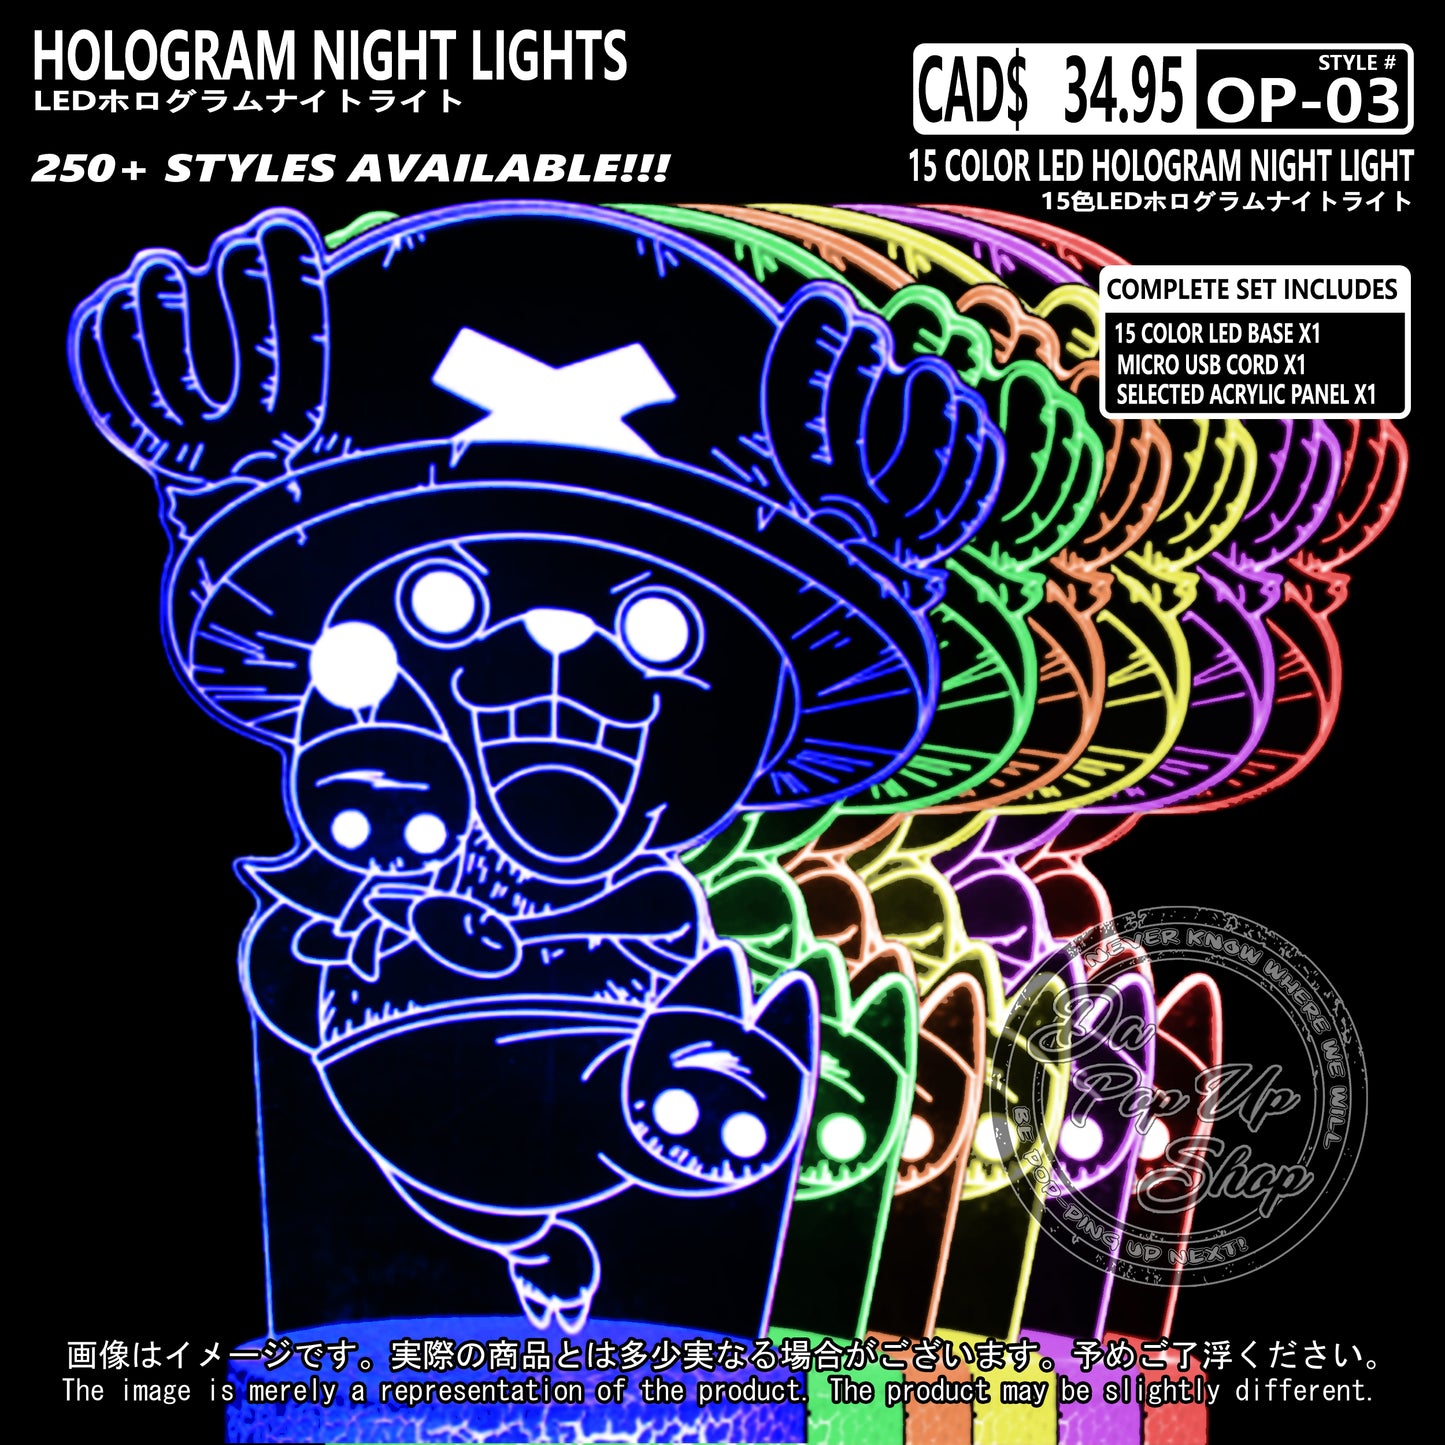 (OP-03) One Piece Hologram LED Night Light